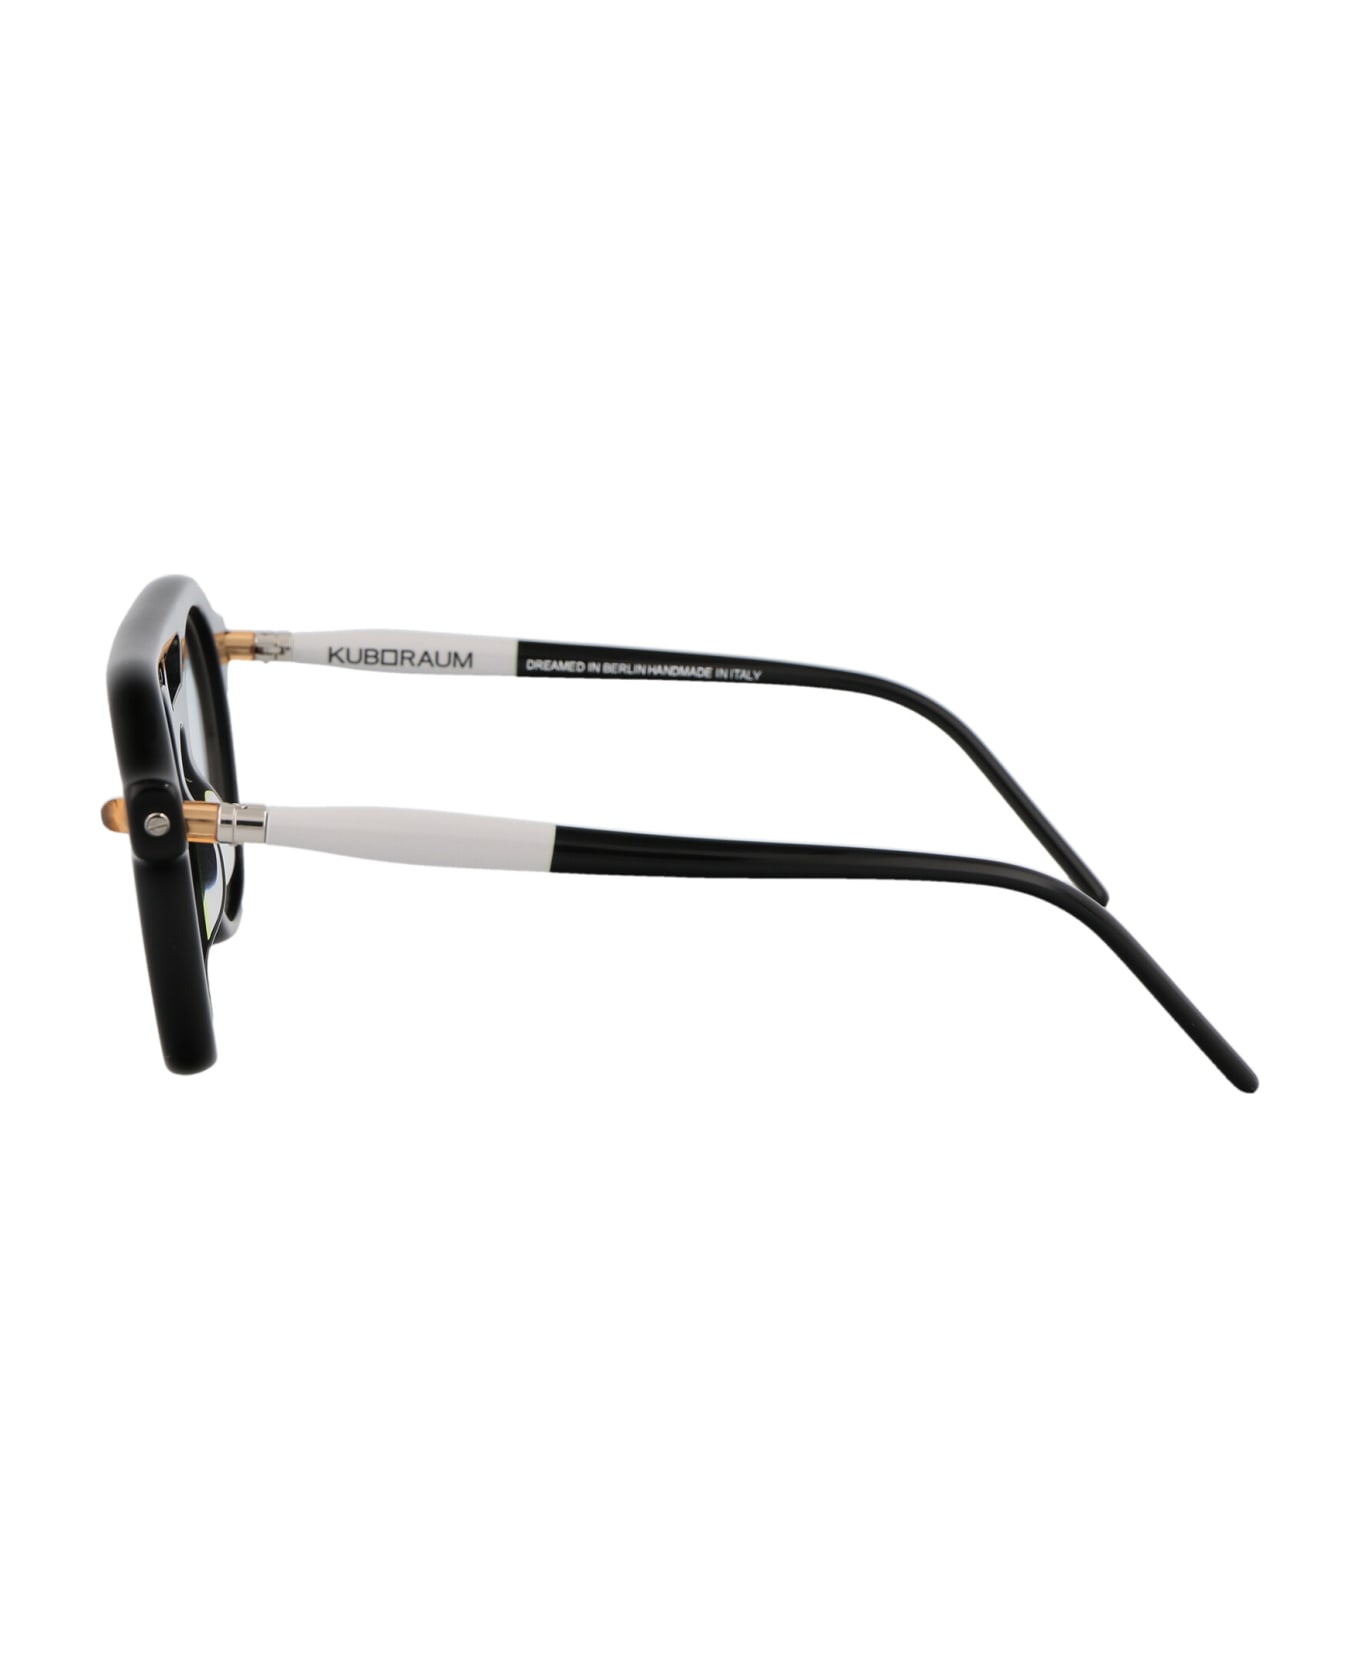 Kuboraum Maske P11 Glasses - BSY アイウェア